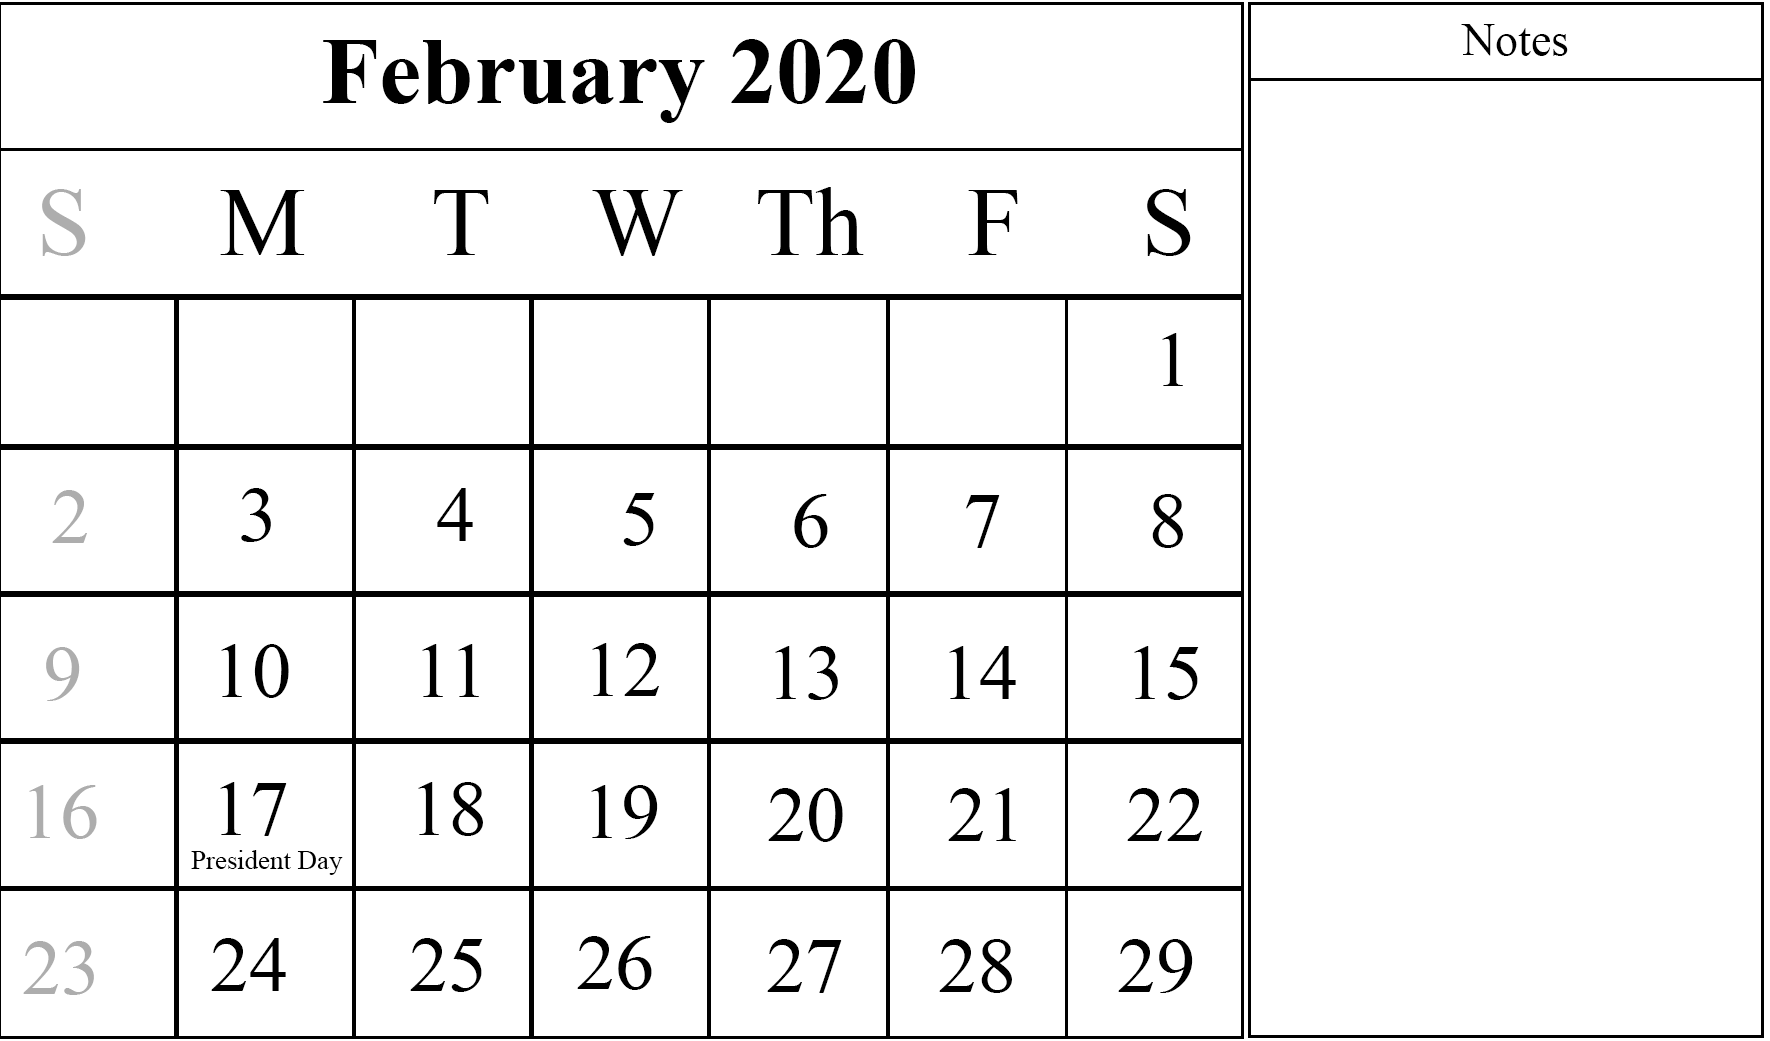 February 2020 Calendar Wallpaper Free February 2020